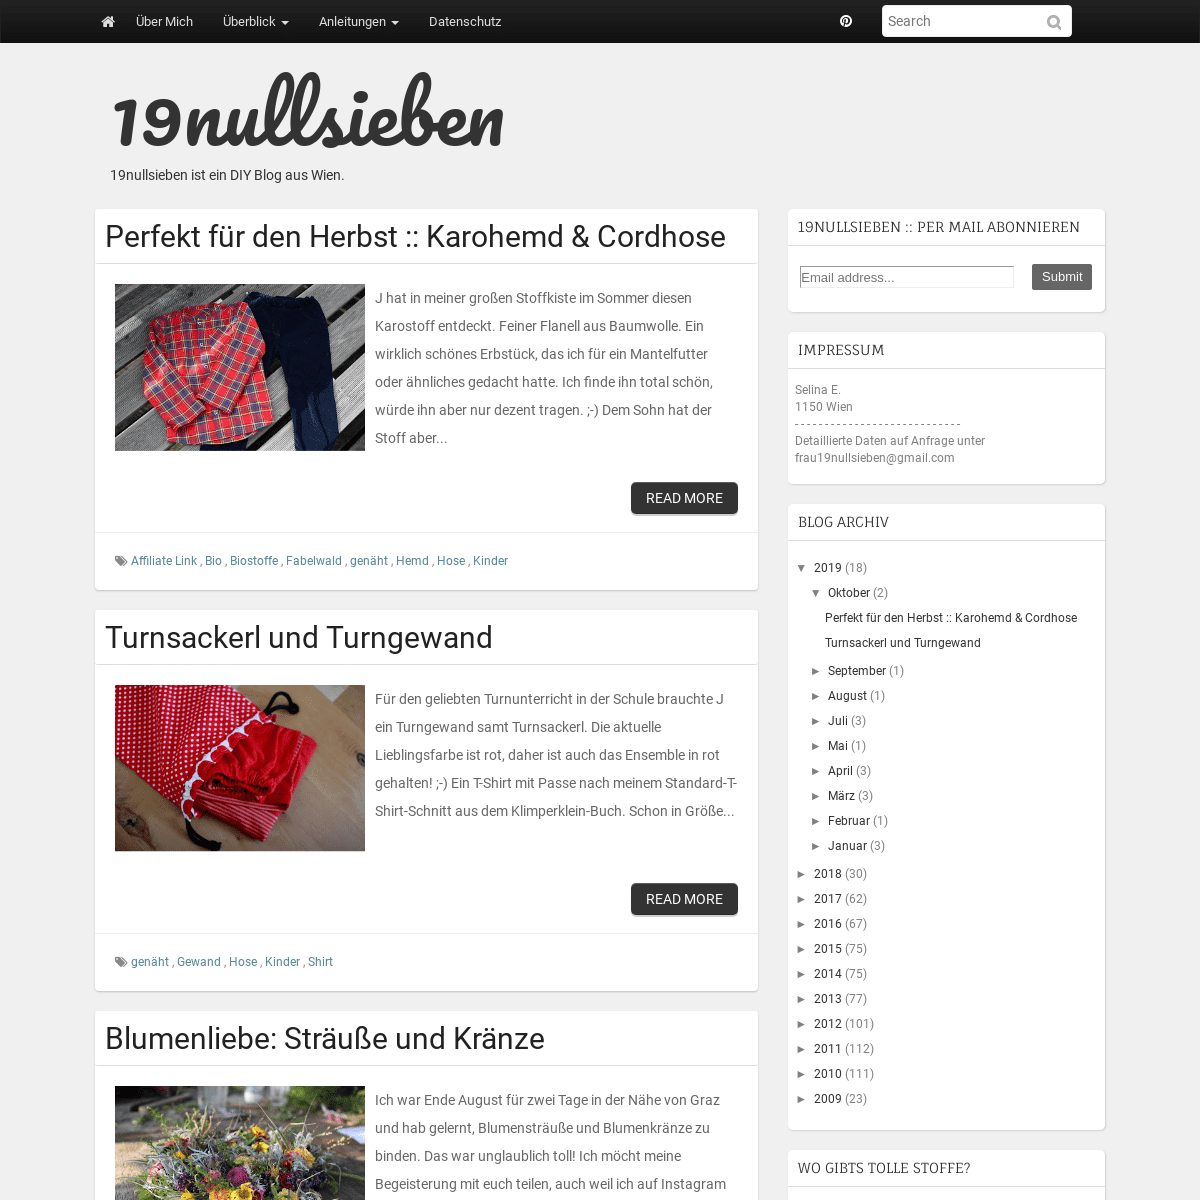 A complete backup of 19nullsieben.blogspot.com